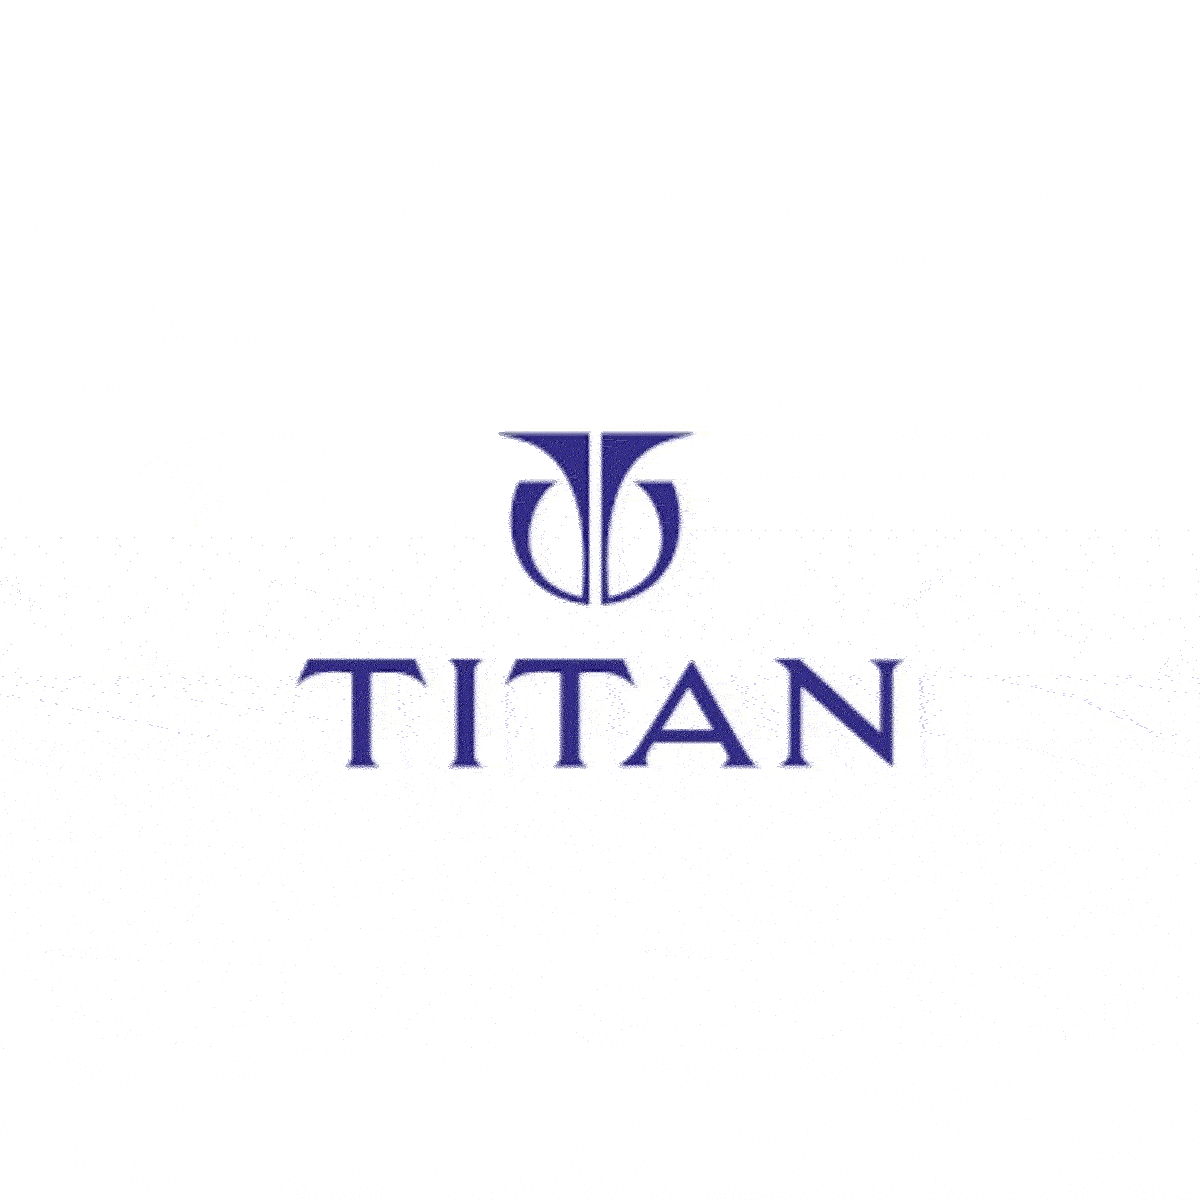 Buy Titan Smart 2.0 Smart Watch with Amoled Display, Blueat Reliance Digital